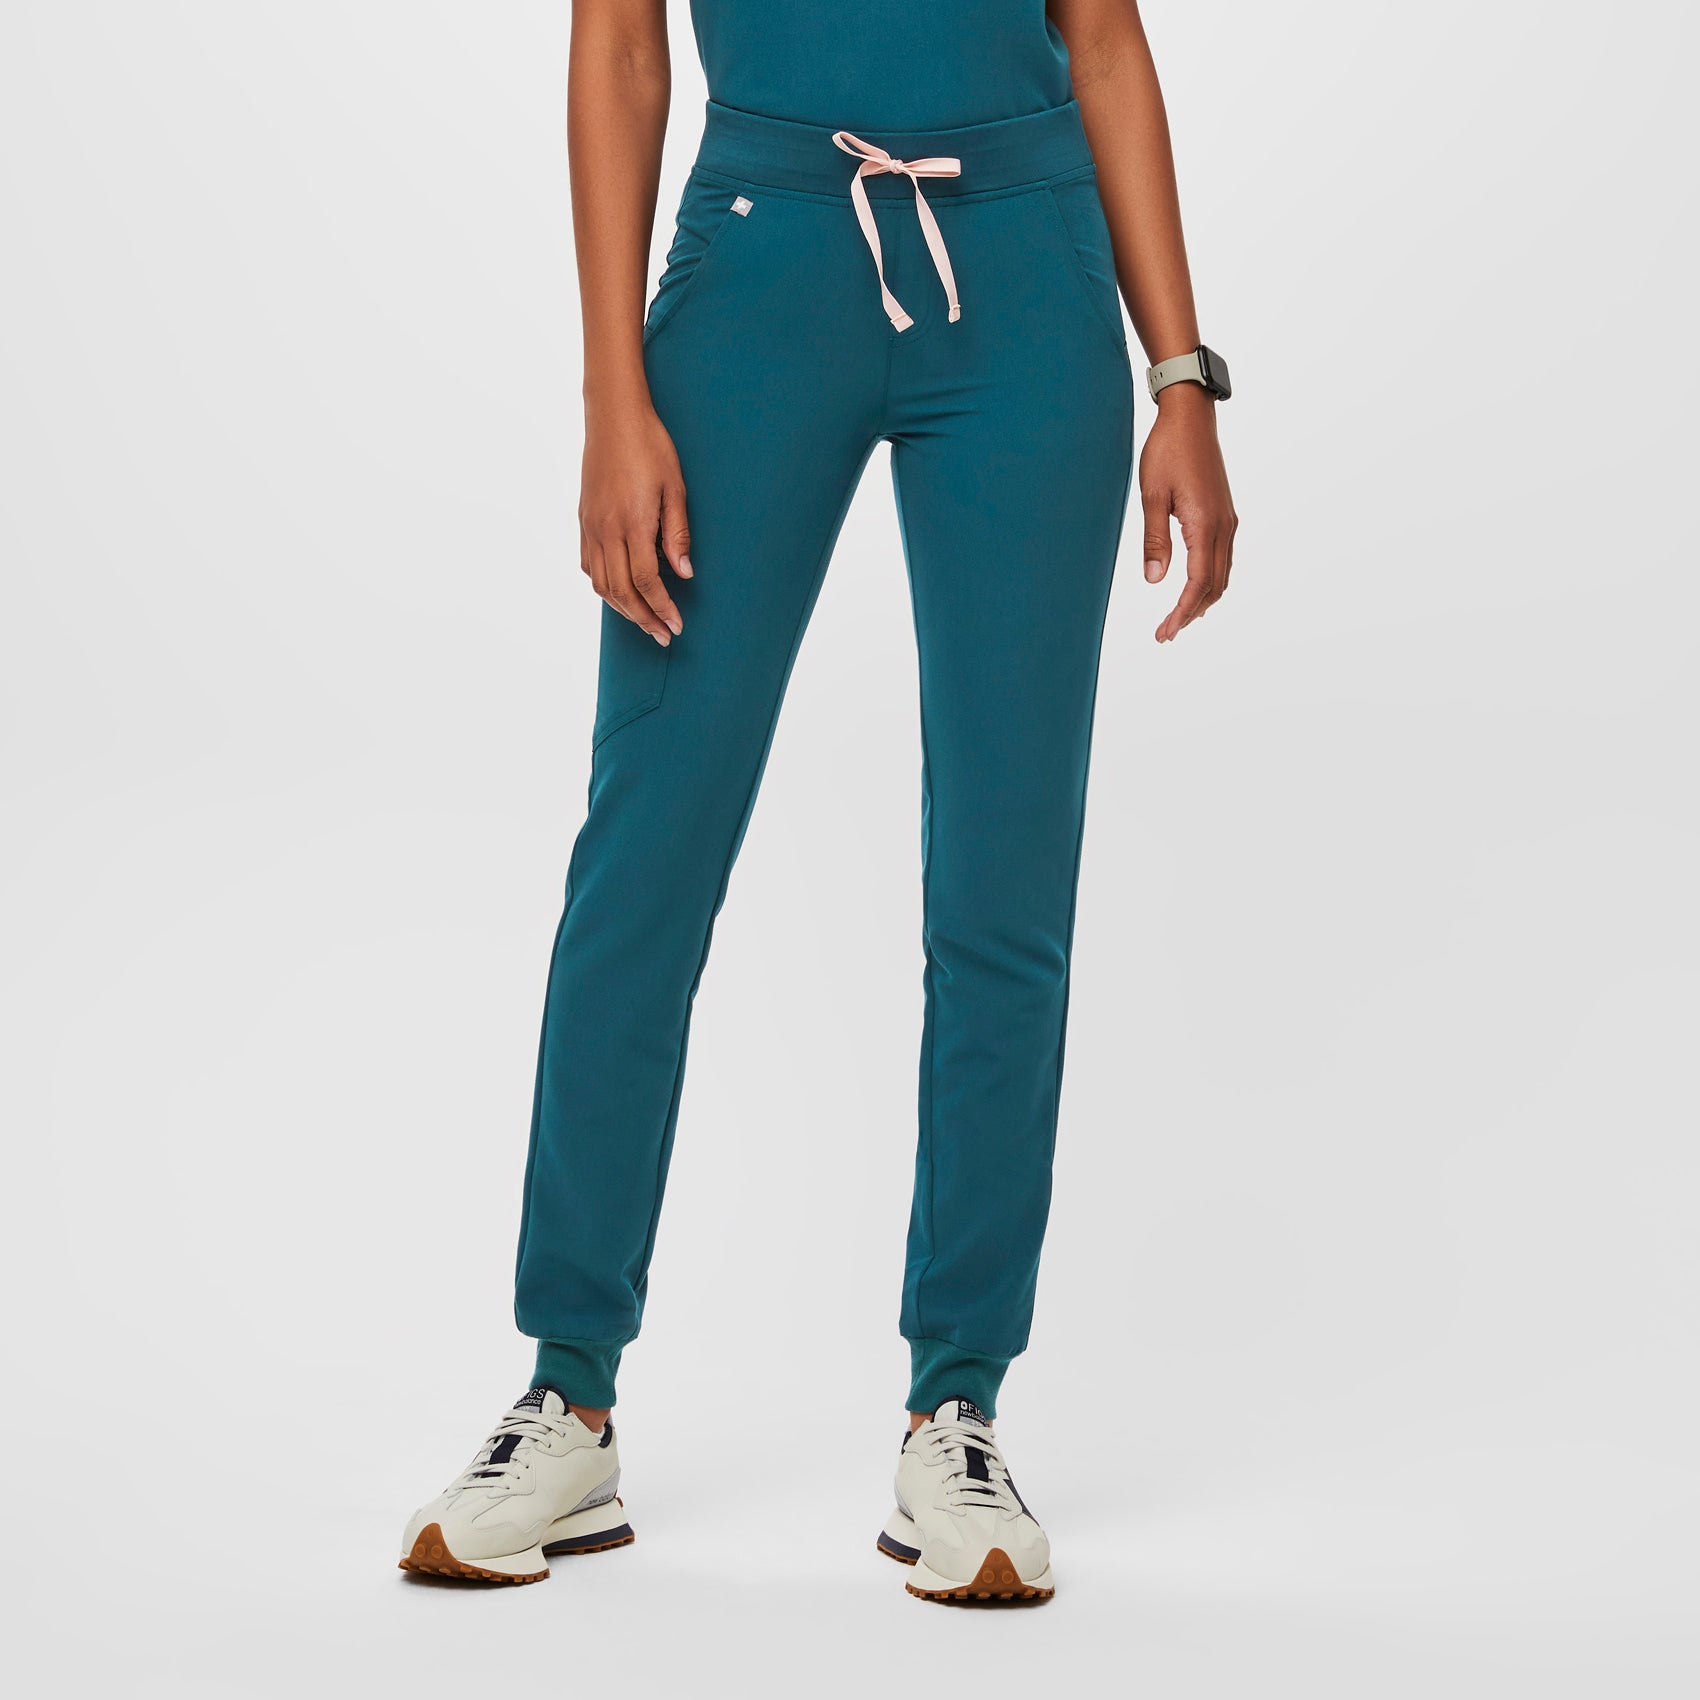 Pantalón deportivo de uniforme médico Zamora™ para mujer - Negro (1) · FIGS